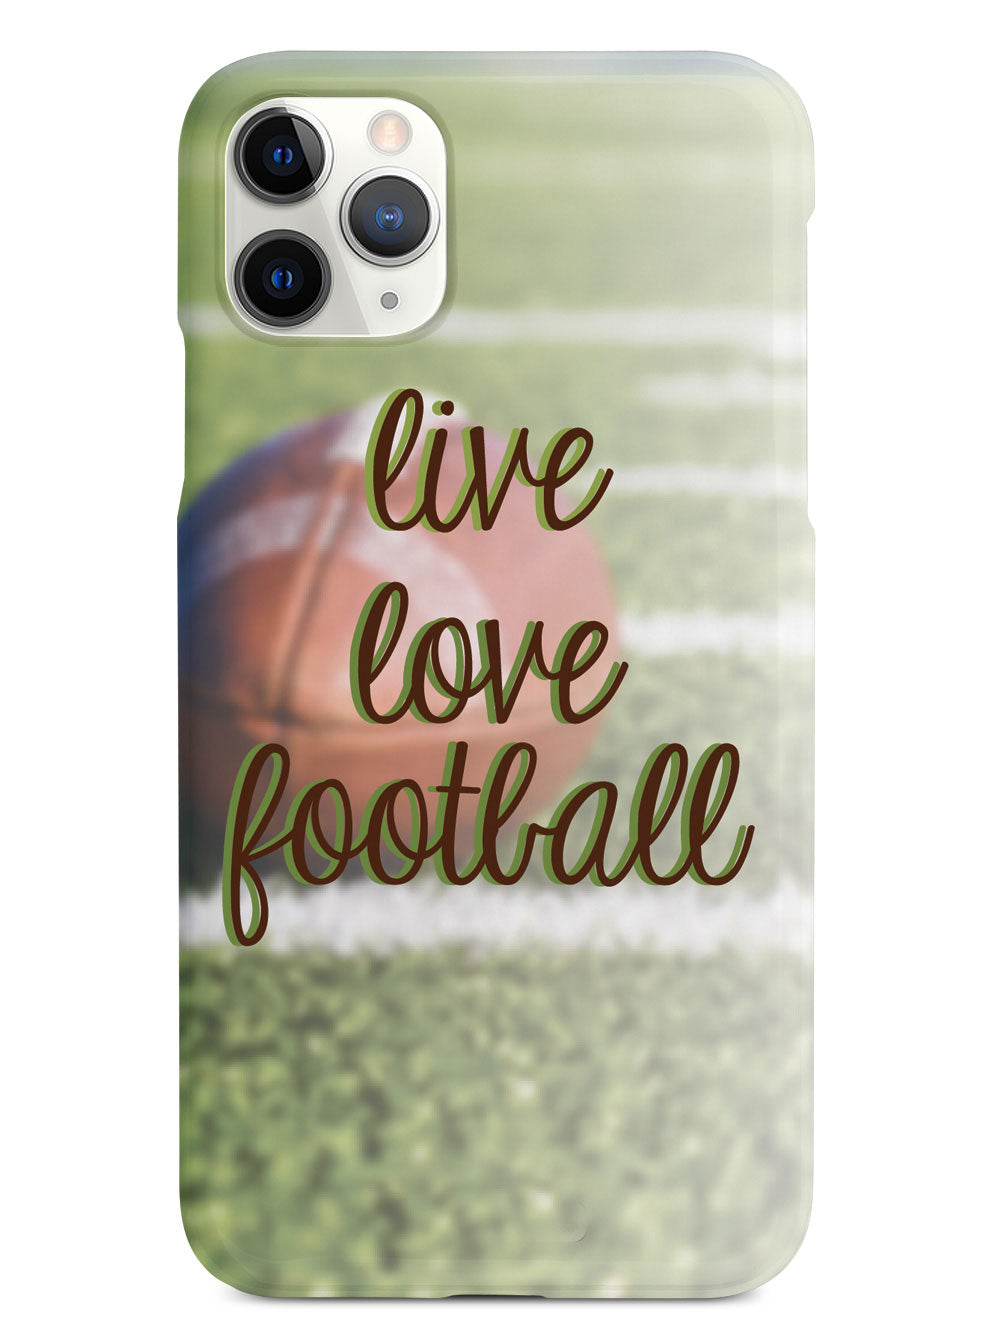 Live Love Football Case